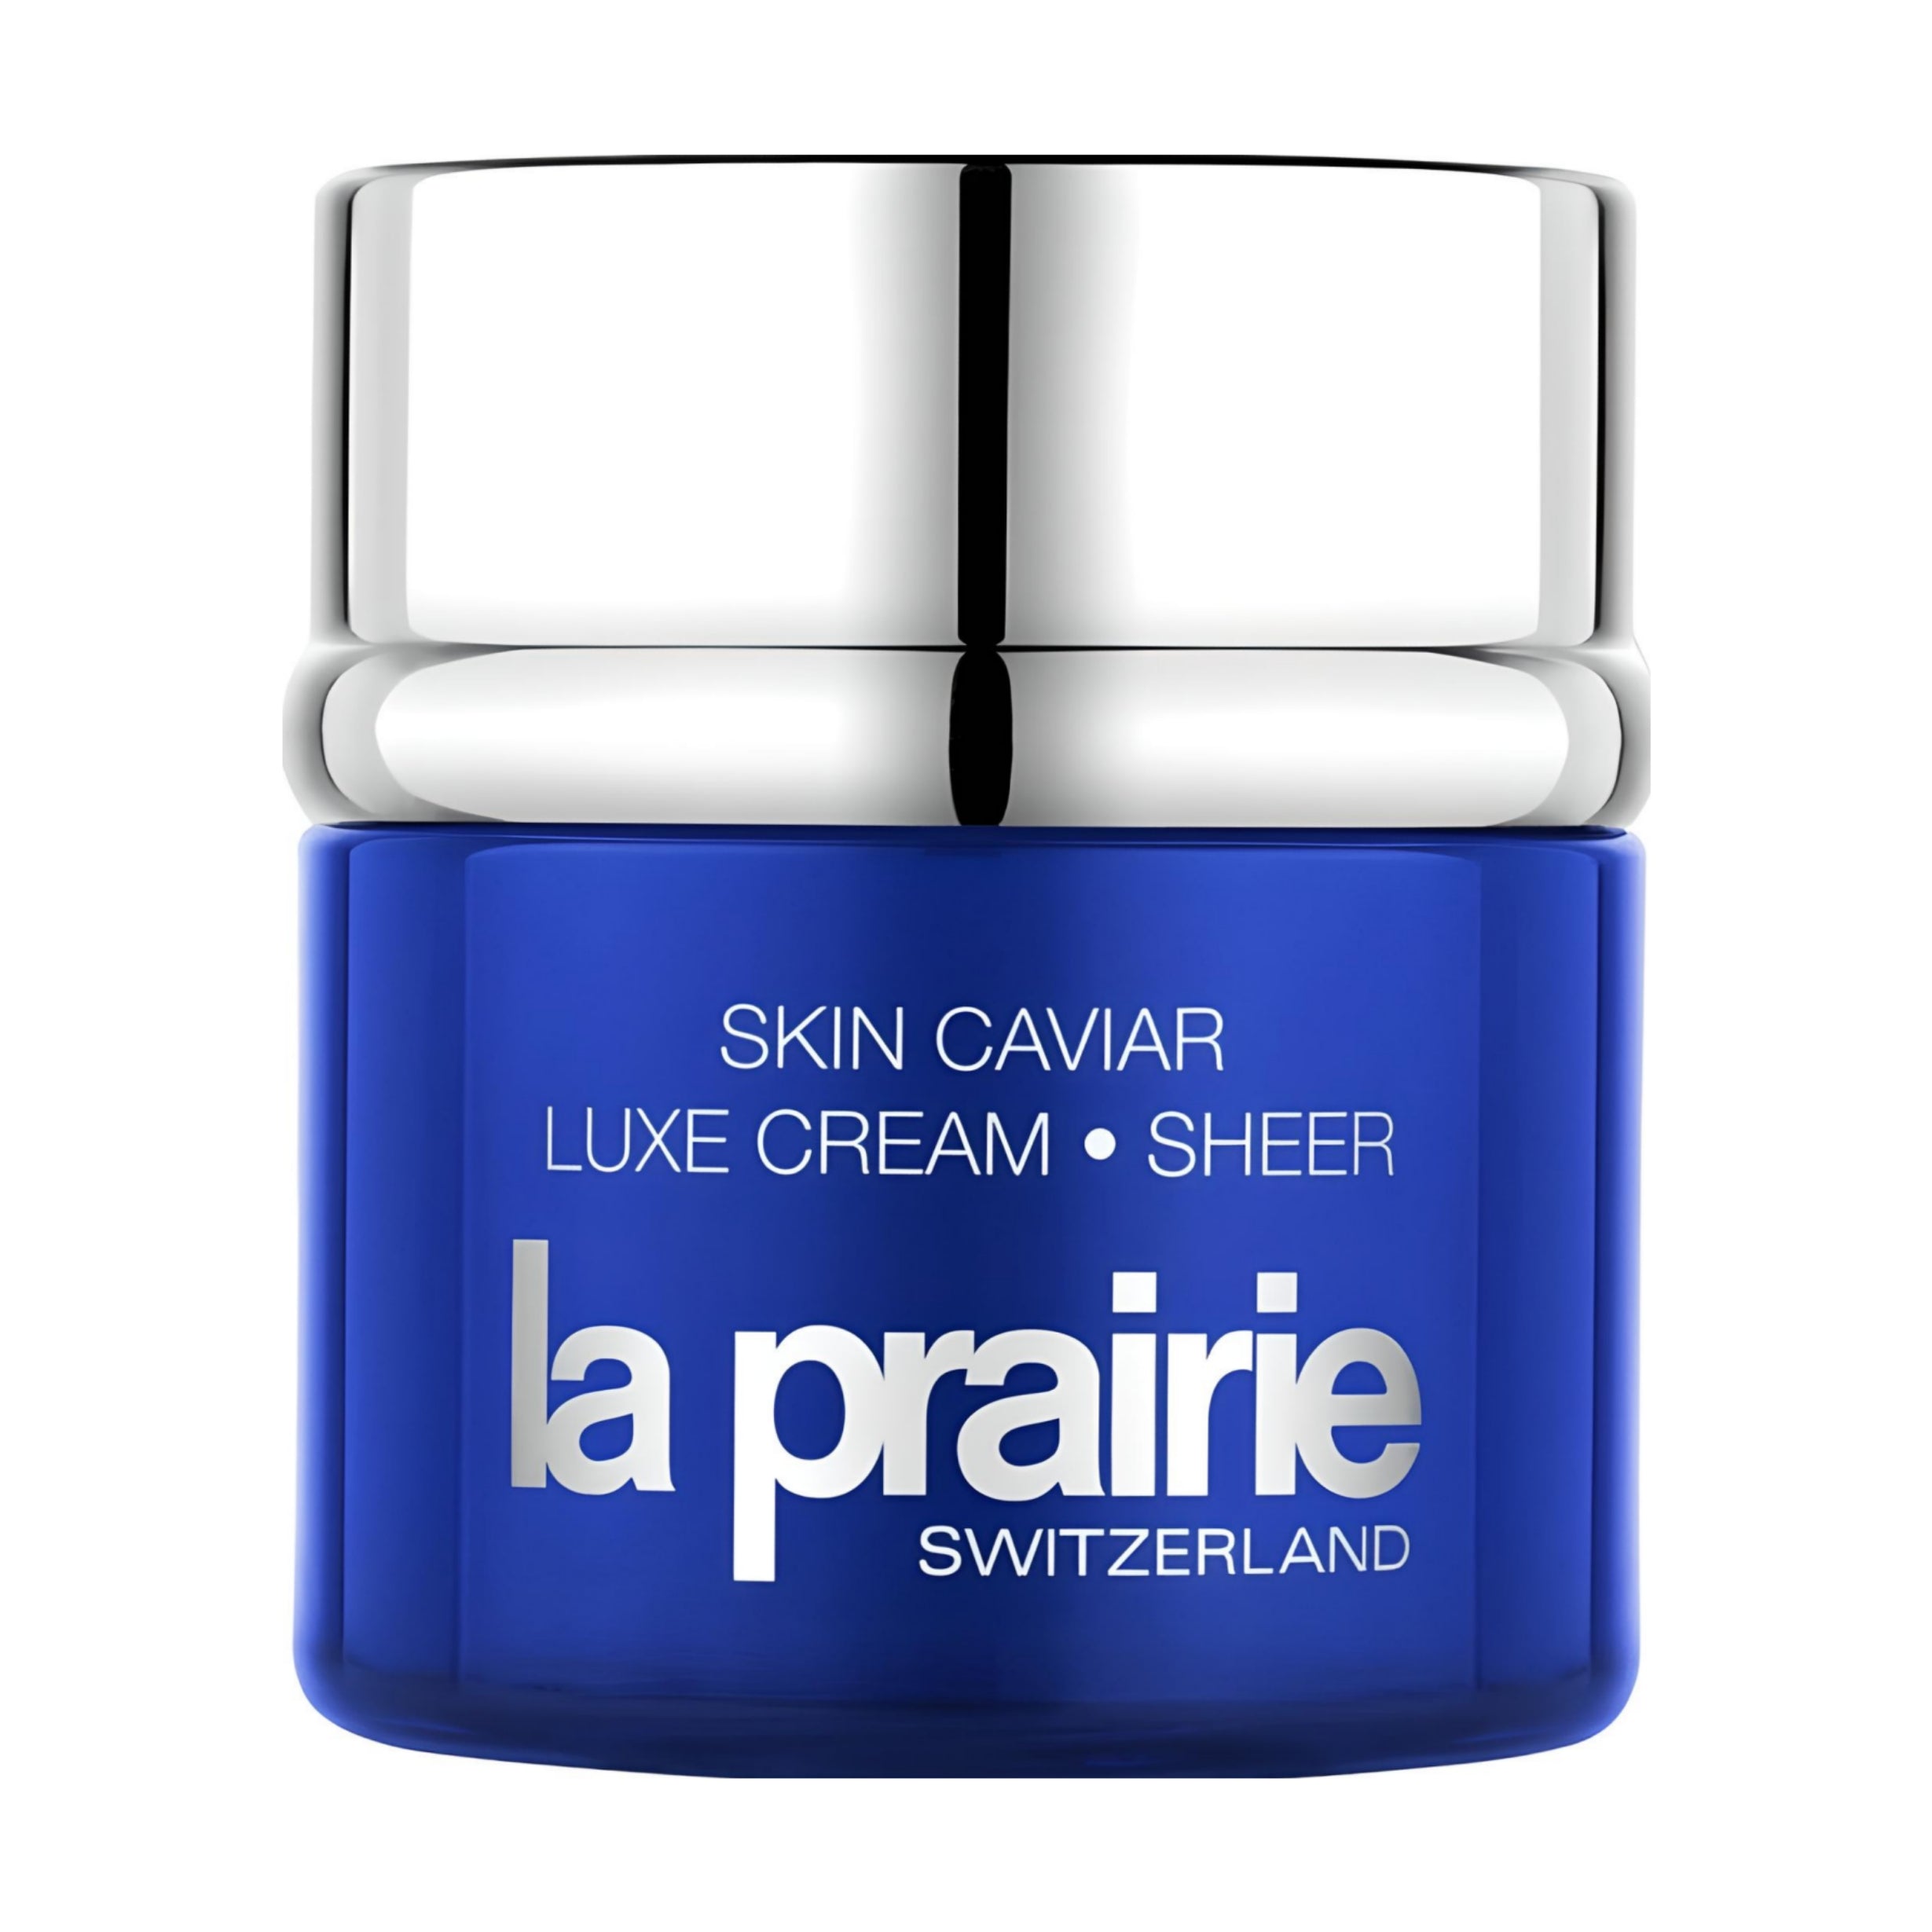 SKIN CAVIAR LUXE cream premier sheer Gesichtspflege LA PRAIRIE   